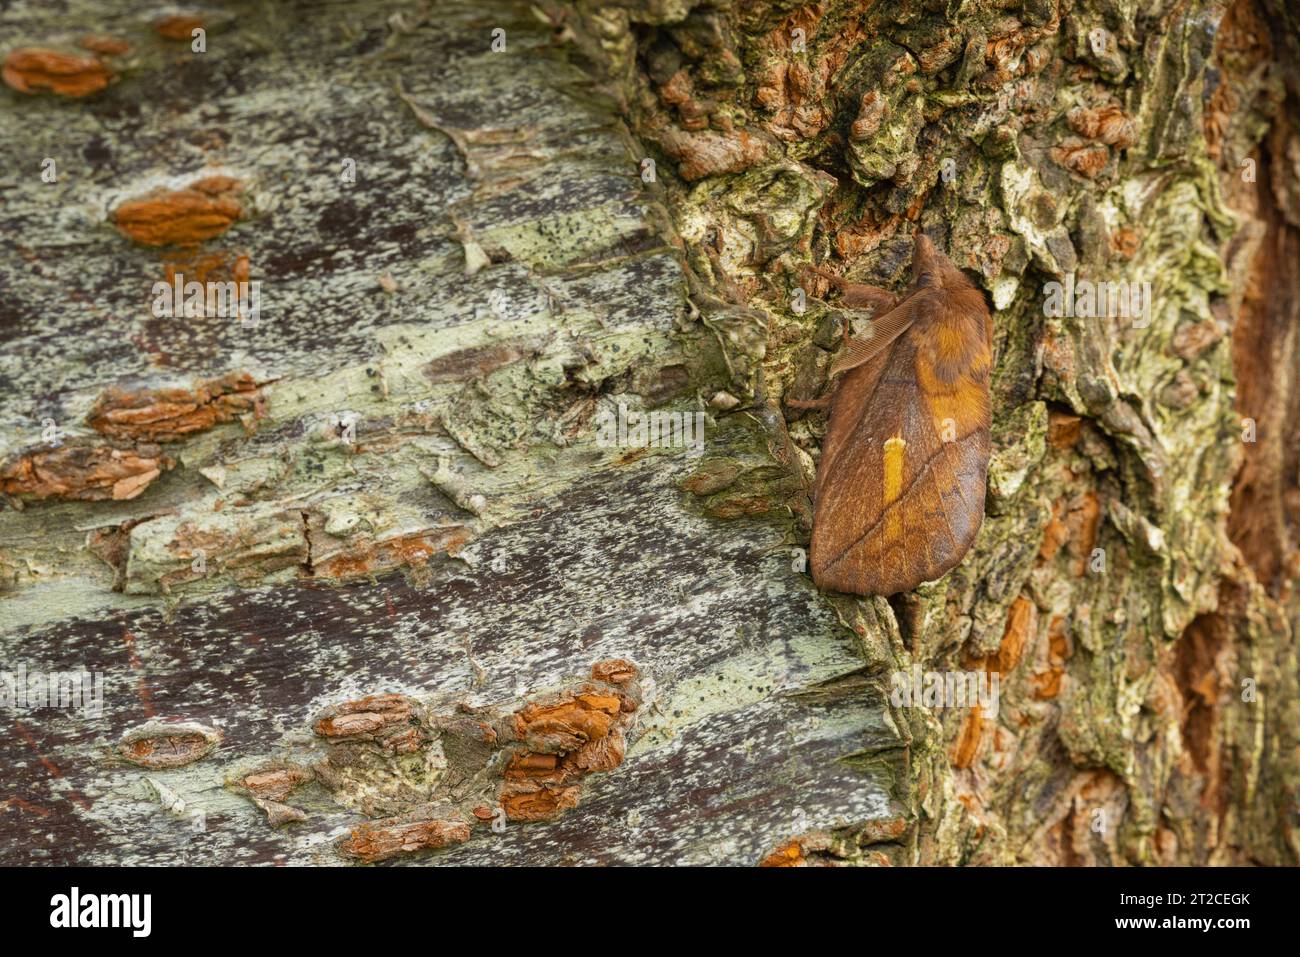 Drinker Euthrix potatoria, imago male roosting on tree trunk, Mudgley, Somerest, UK, August Stock Photo